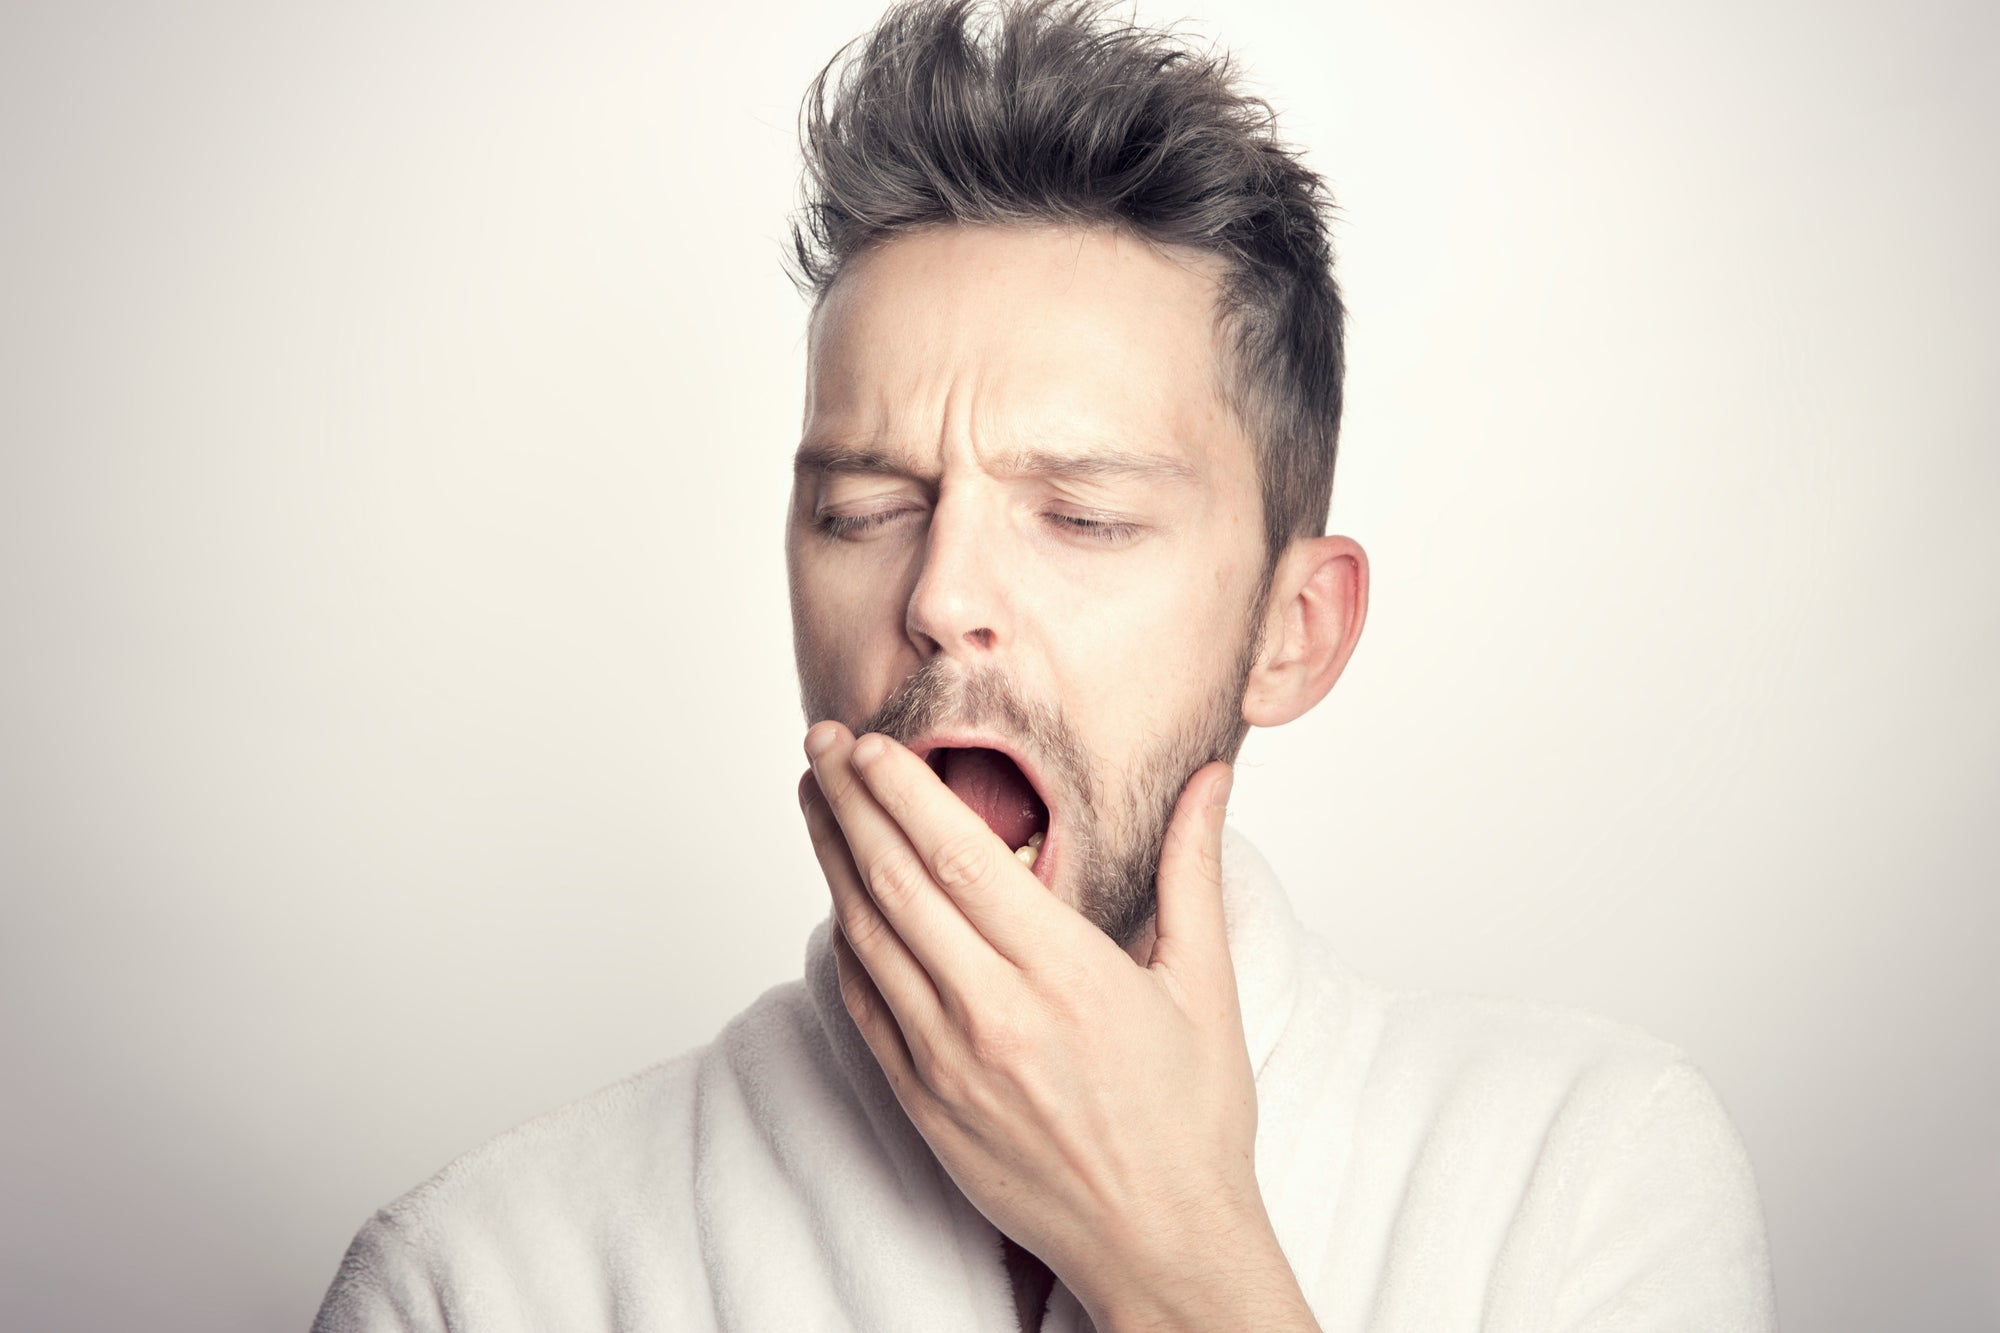 Mouth Guard for Sleep Apnea: An In-Depth Guide